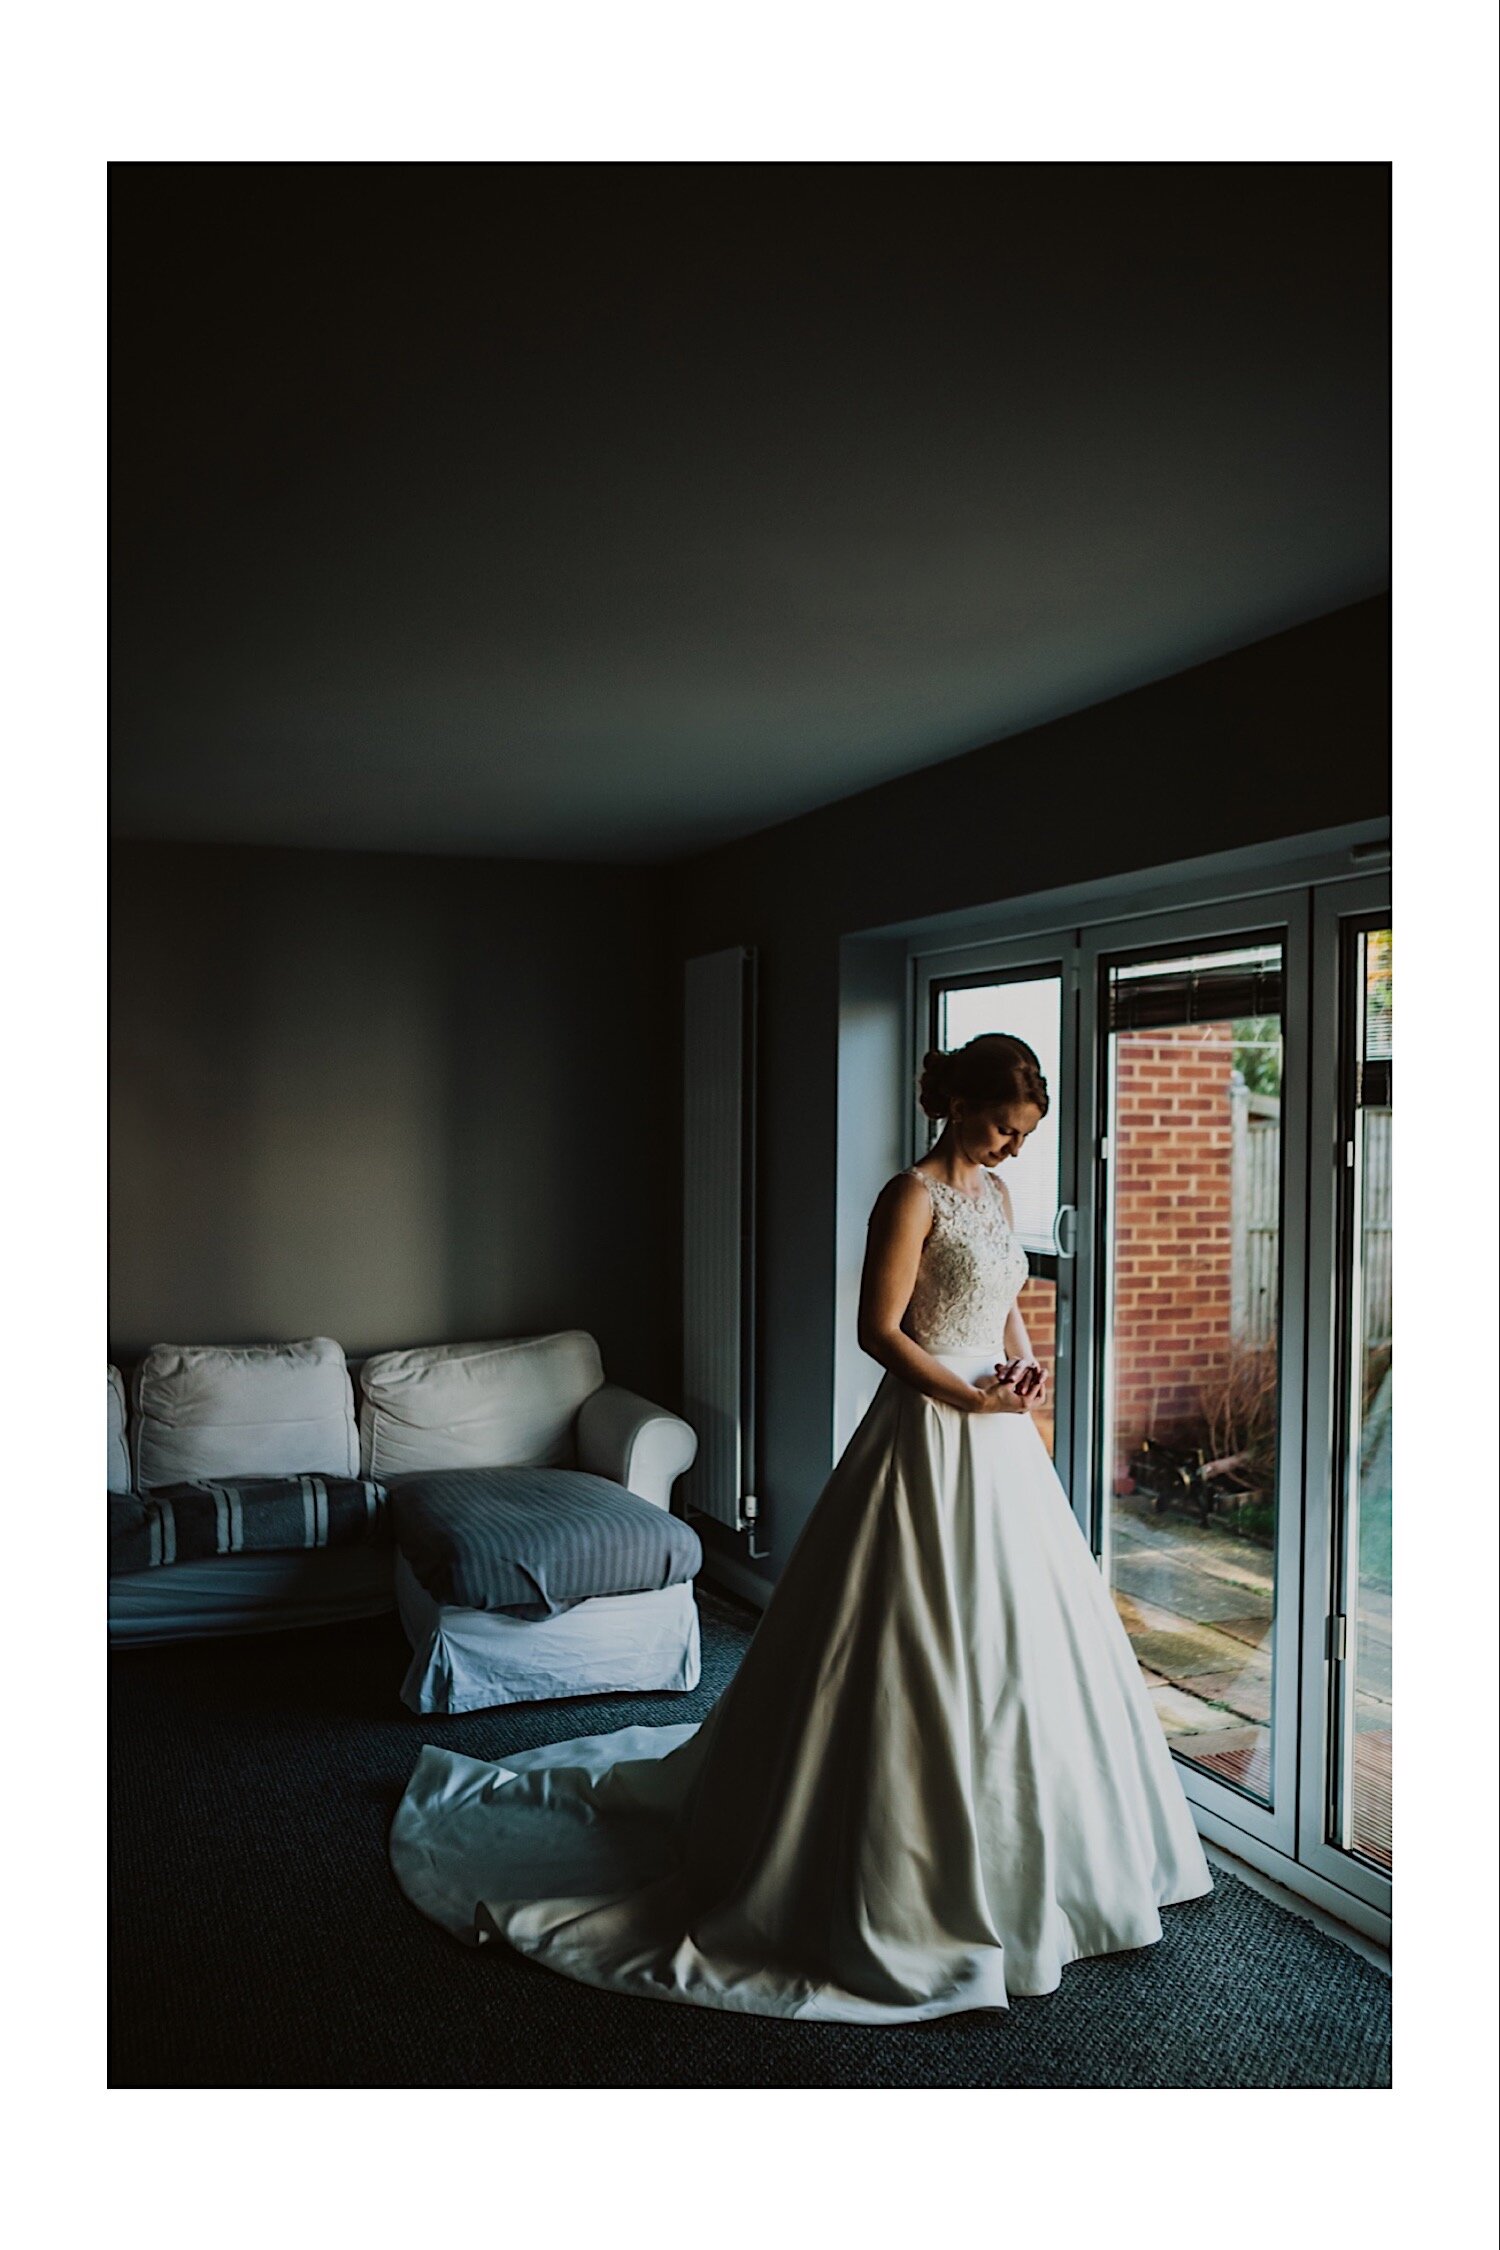 020_TWS-230_bride_billet__ready_photography_henley_oxfordshire_millitary_bridalprep_crooked_wedding_getting_groom_winter_dress.jpg